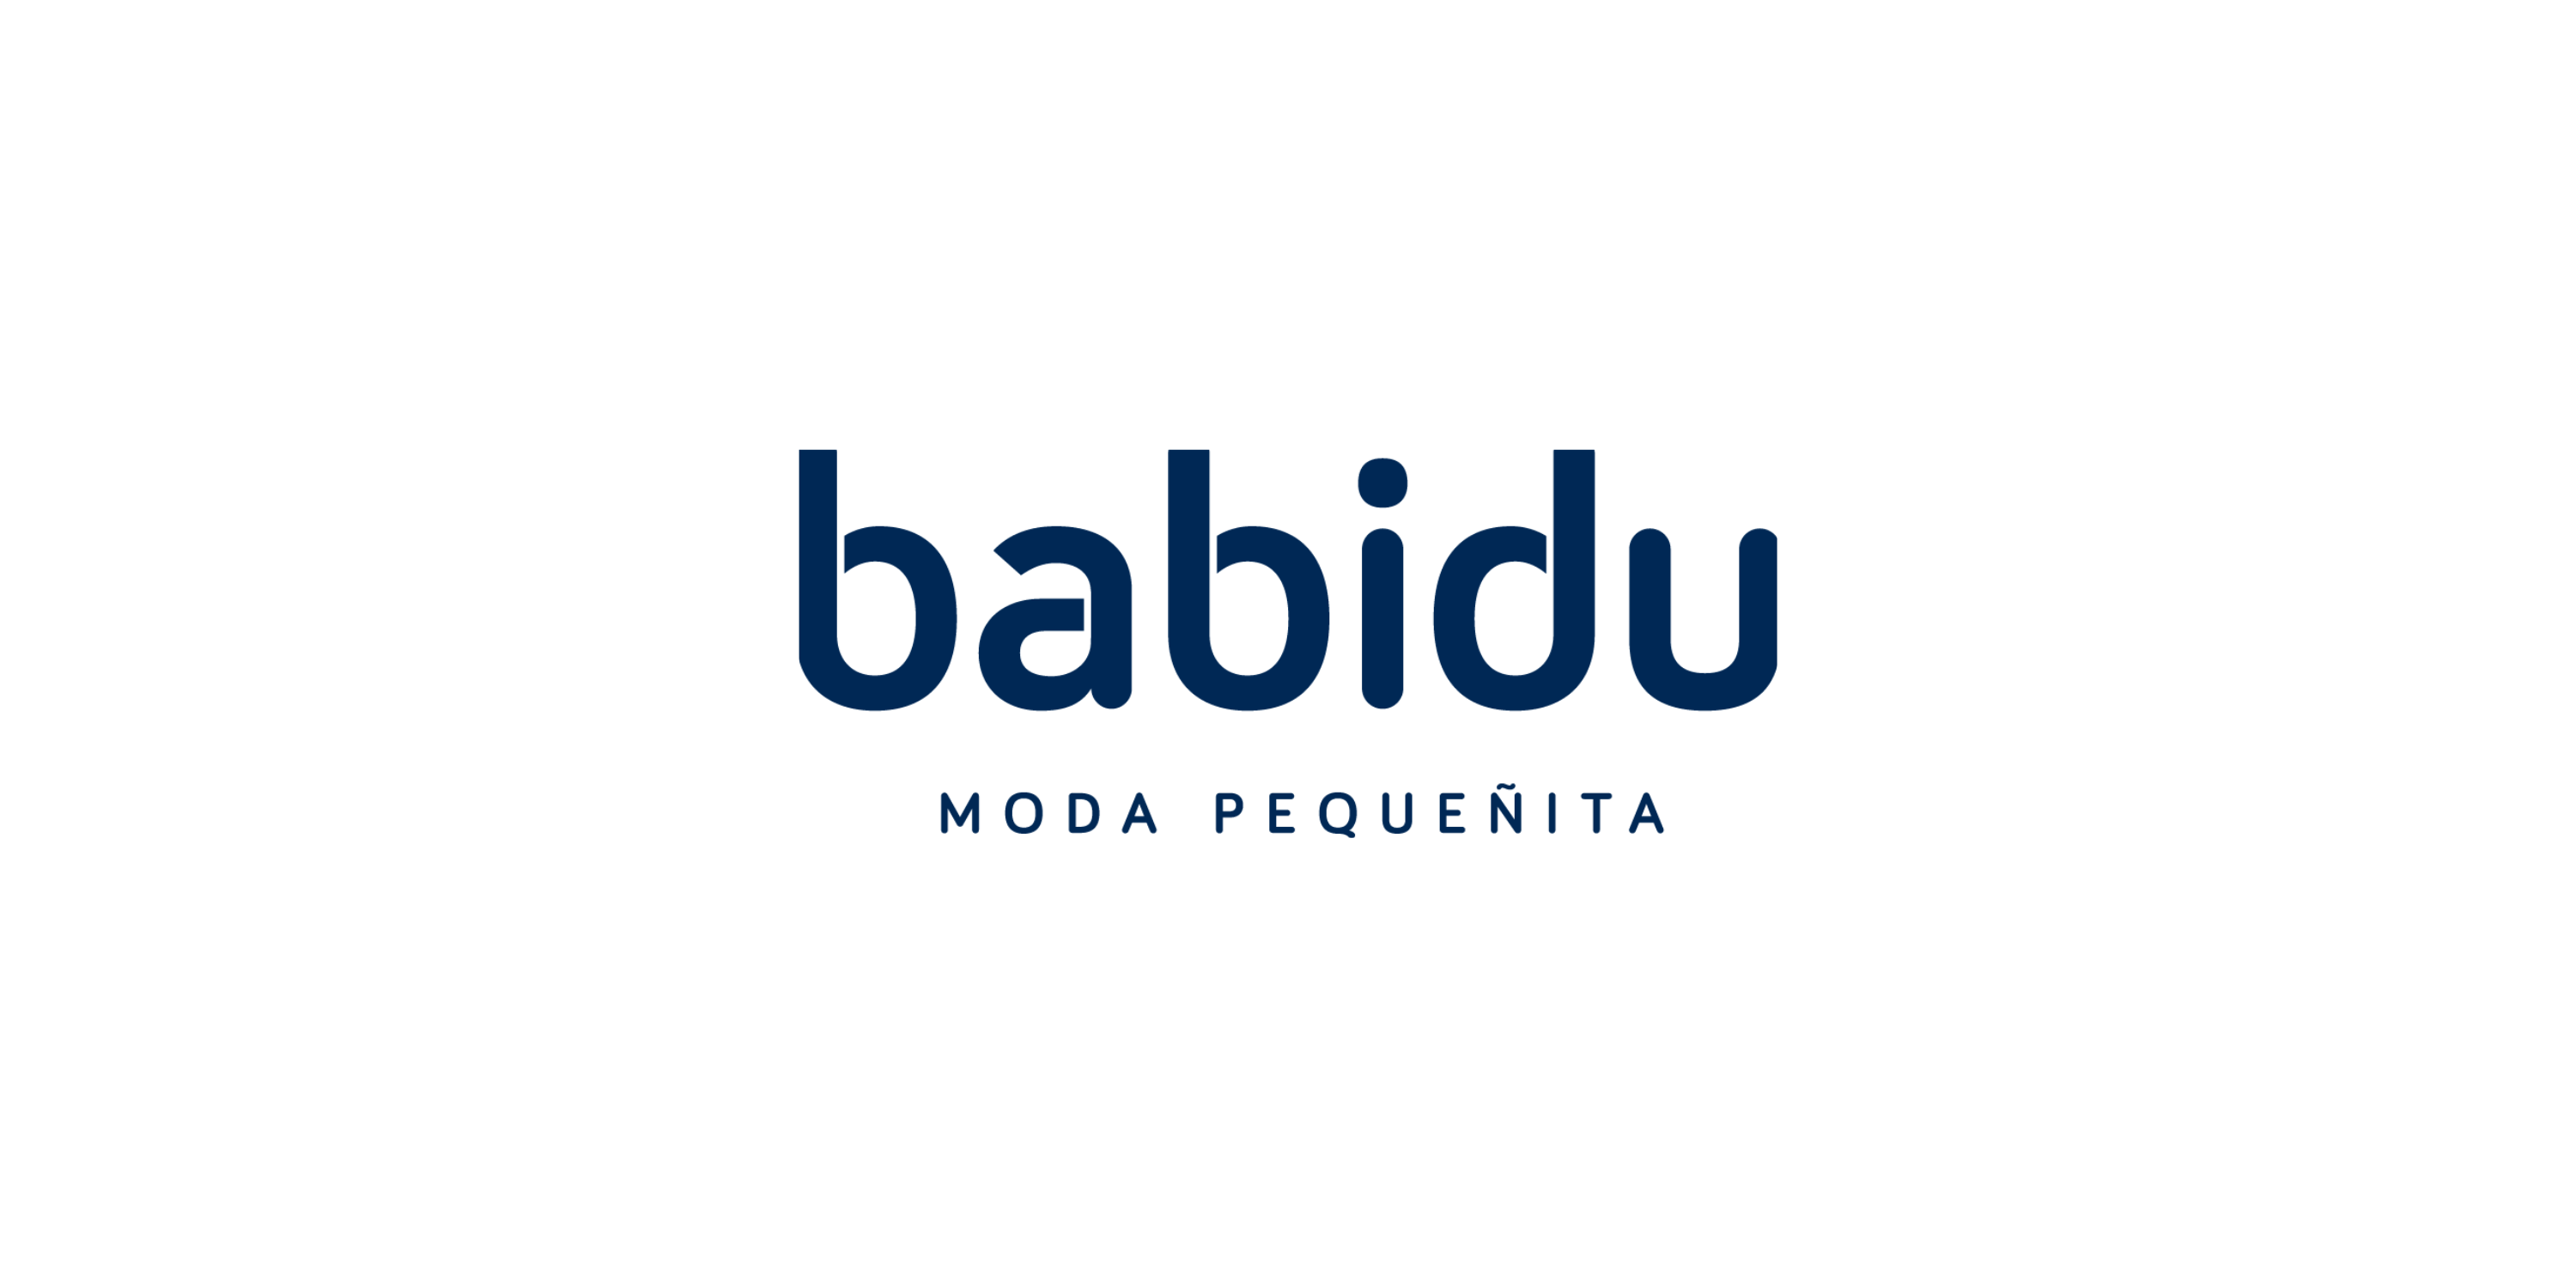 Luxury kids - brand: Babidu